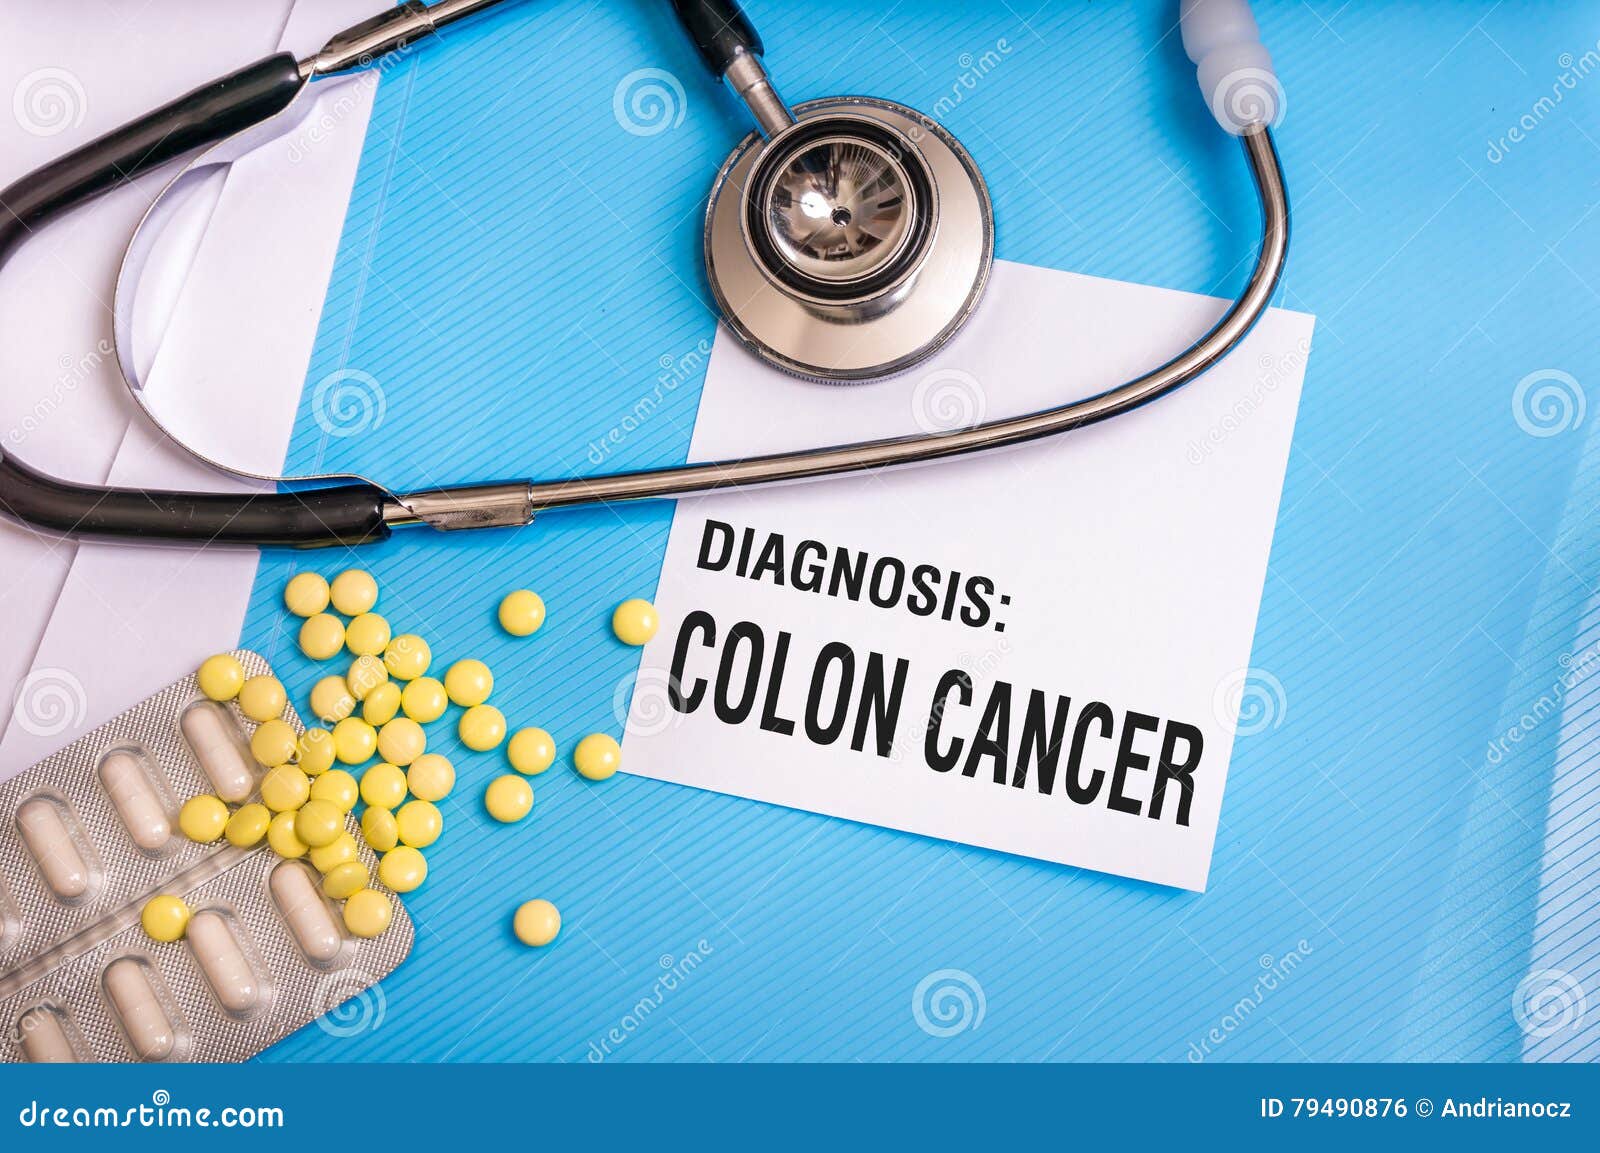 Colon Cancer Words Written on Medical Blue Folder Stock Photo - Image ...